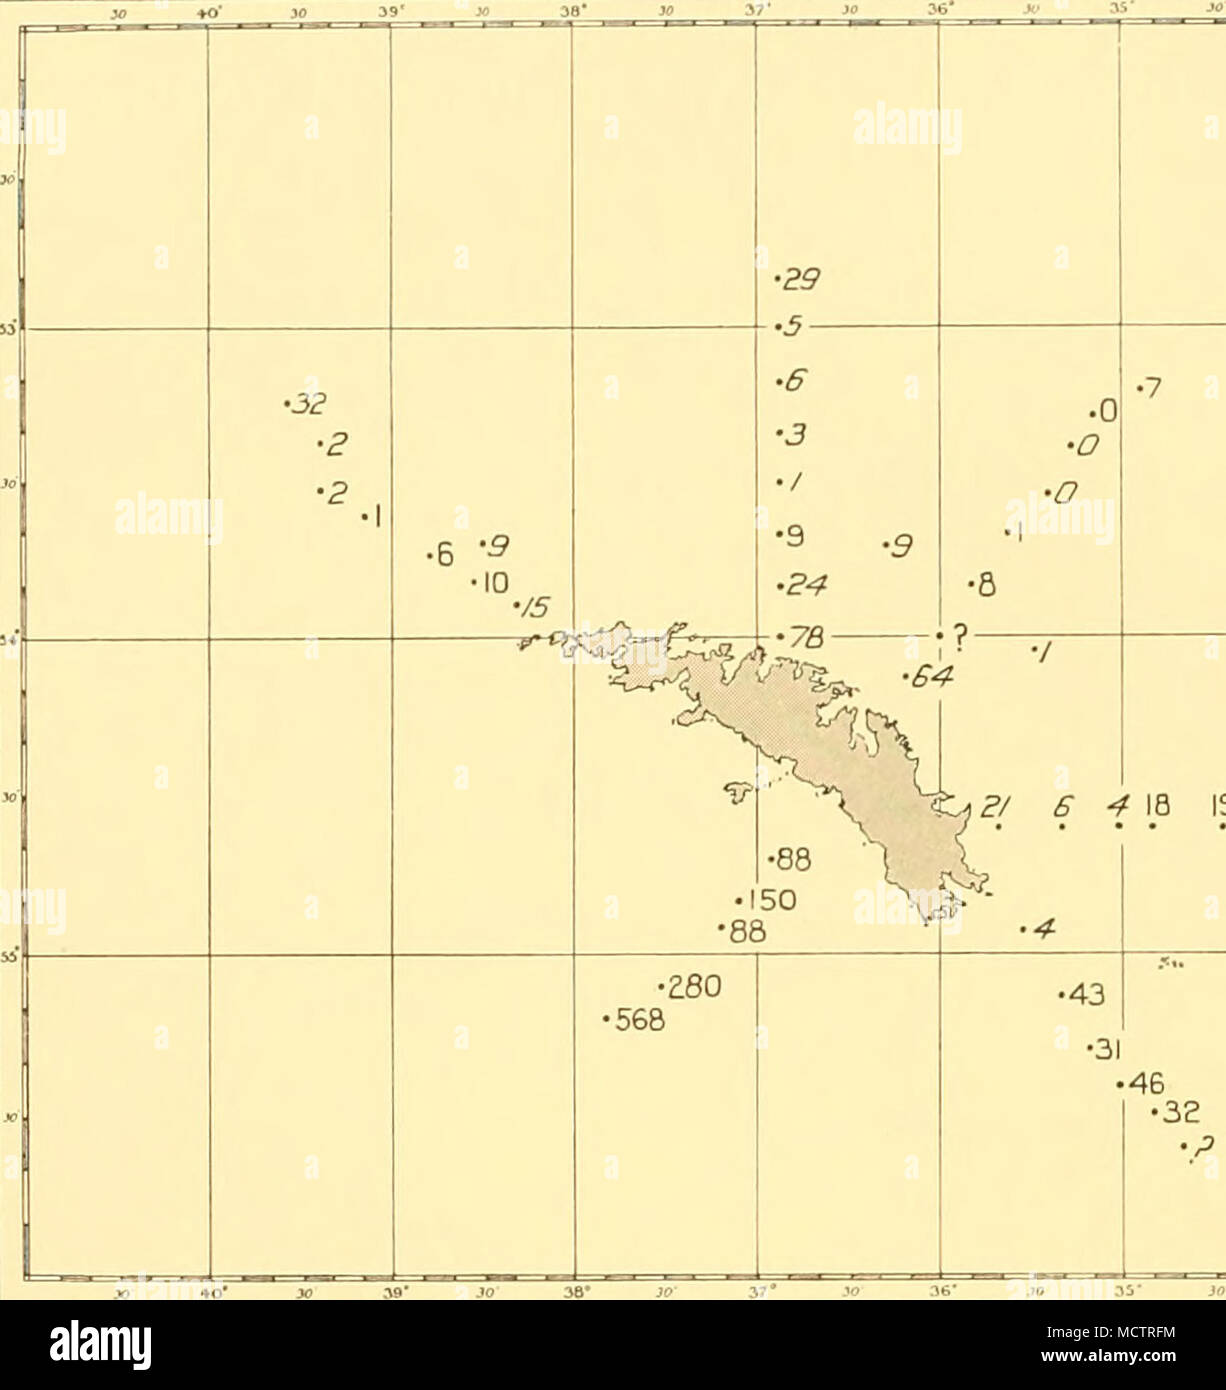 . 34 ya&quot; )?/ 6 4 18 19 36 3 O Jty 3-f Fig. 24. Distribution of plankton quantities around South Georgia, 1927-8, Sts. WS 144-93. 30 +0* 30 39* â¢/ I â¢/ I -â¢II&quot; â¢4 I â¢2 I â¢2 1 â¢/a â o â o -&amp;&amp;-â¬ V TSN St 1 8 ^ / e i2 J 40' .Â«â¢ 39* JO' 36* JÂ£&quot; 37*  3i  .'o 3+' Fig. 25. Distribution of plankton quantities around South Georgia, 1928-9, Sts. WS 257-96. Stock Photo